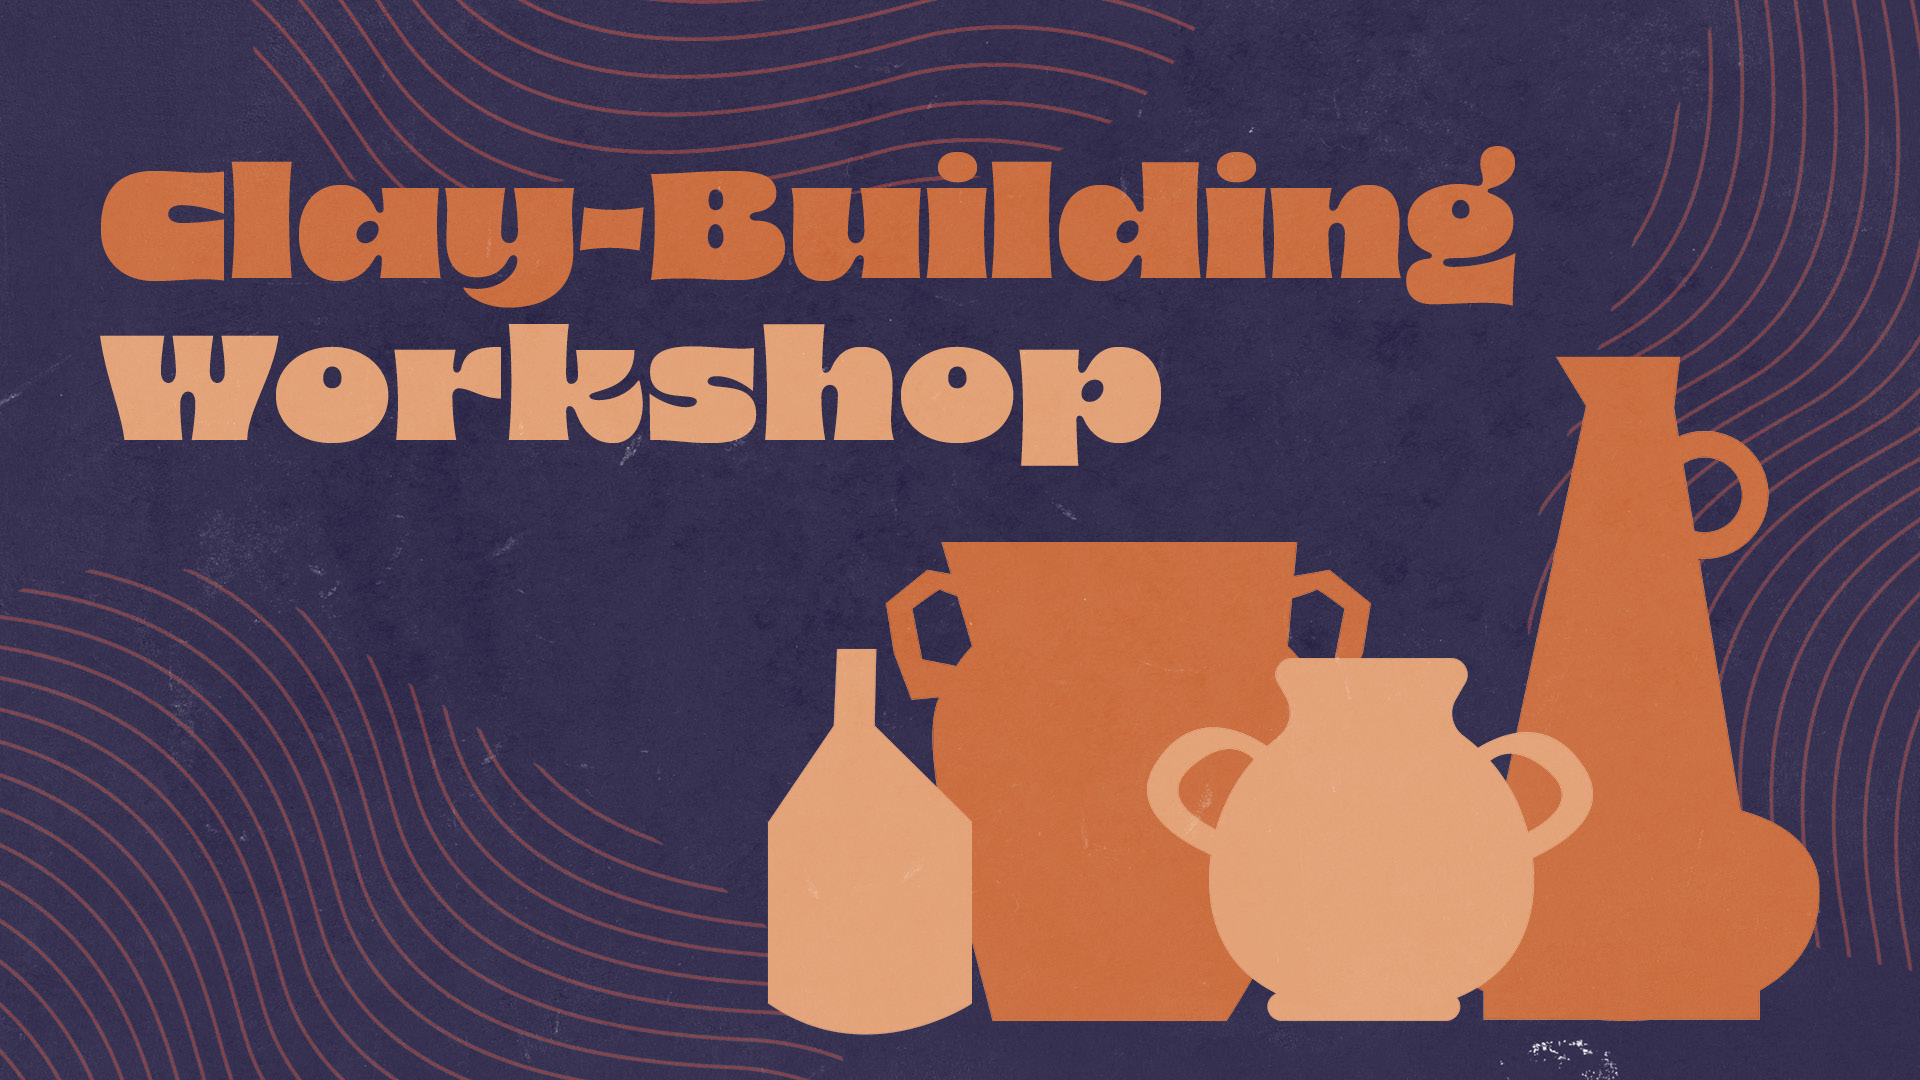 Clay-Building Workshop